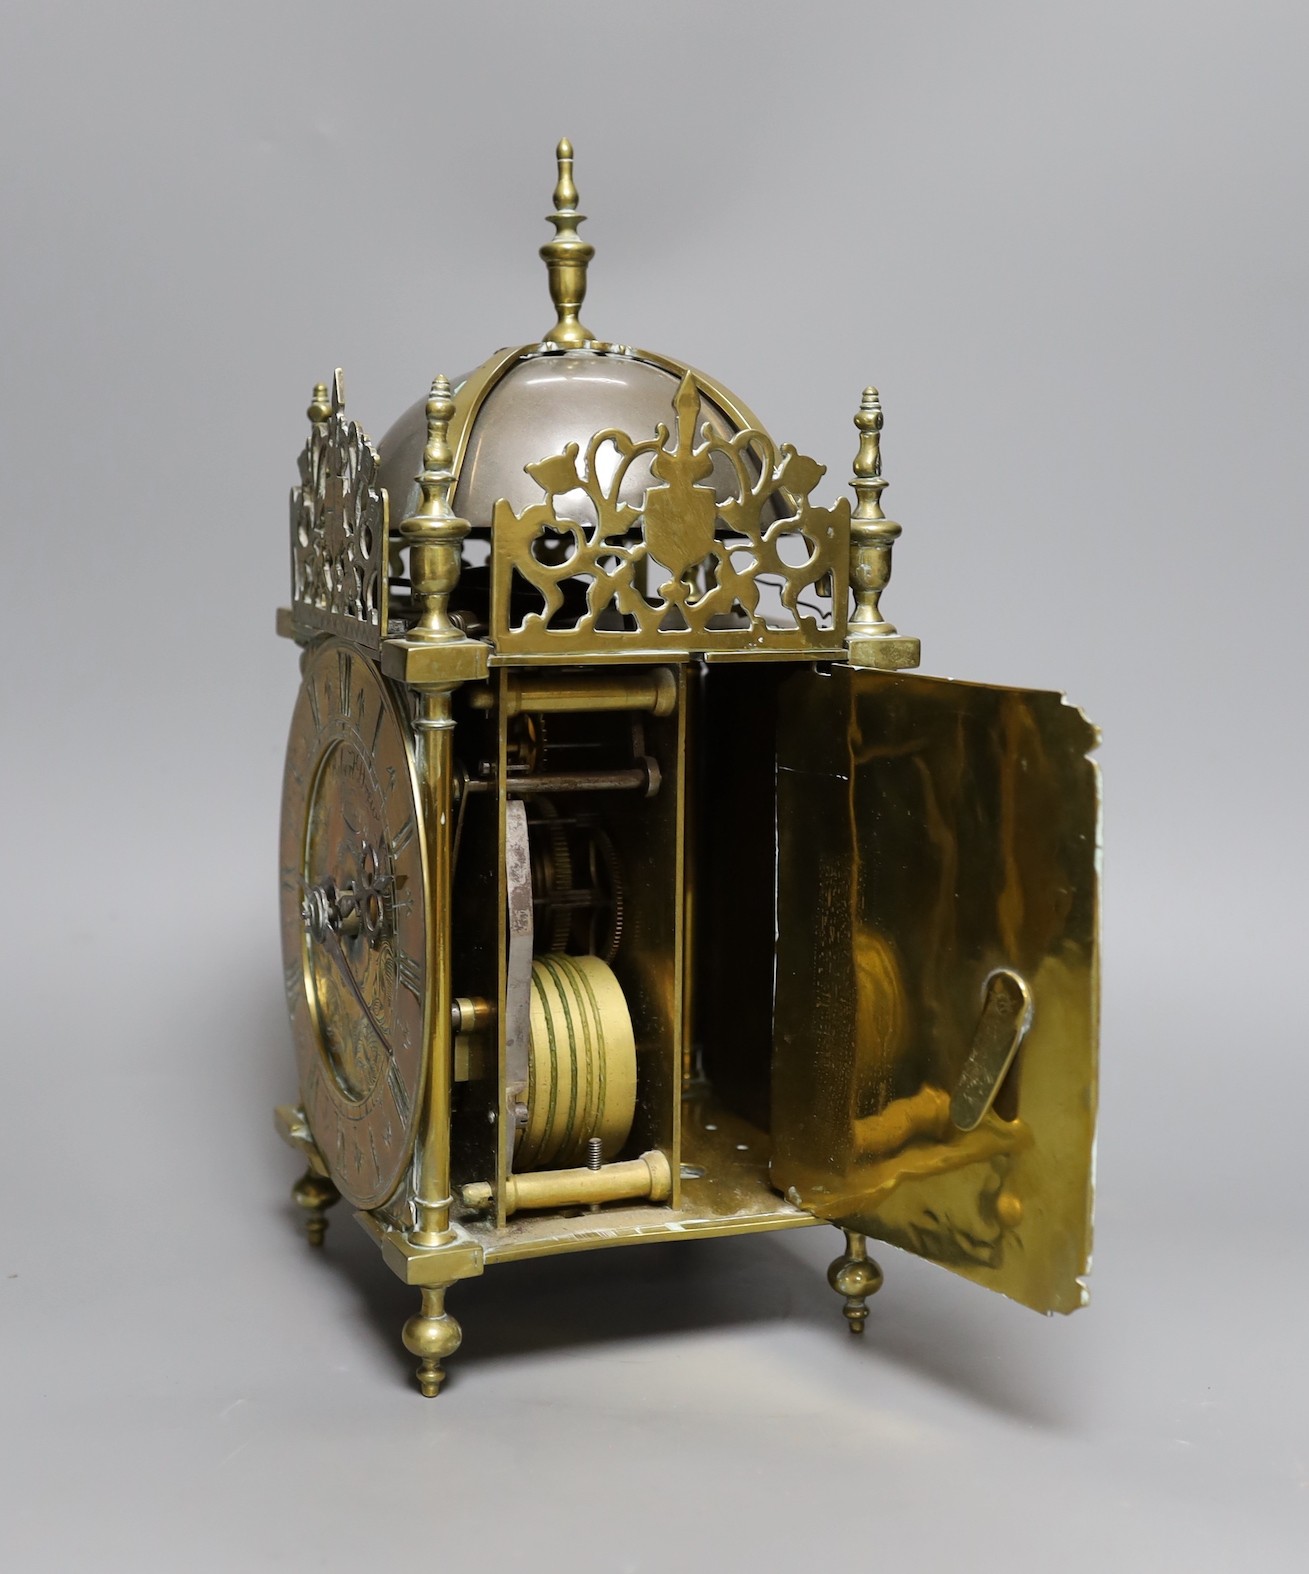 A brass lantern clock, signed Robert Drew, London, single fusee movement,34 cms high, - Image 3 of 4